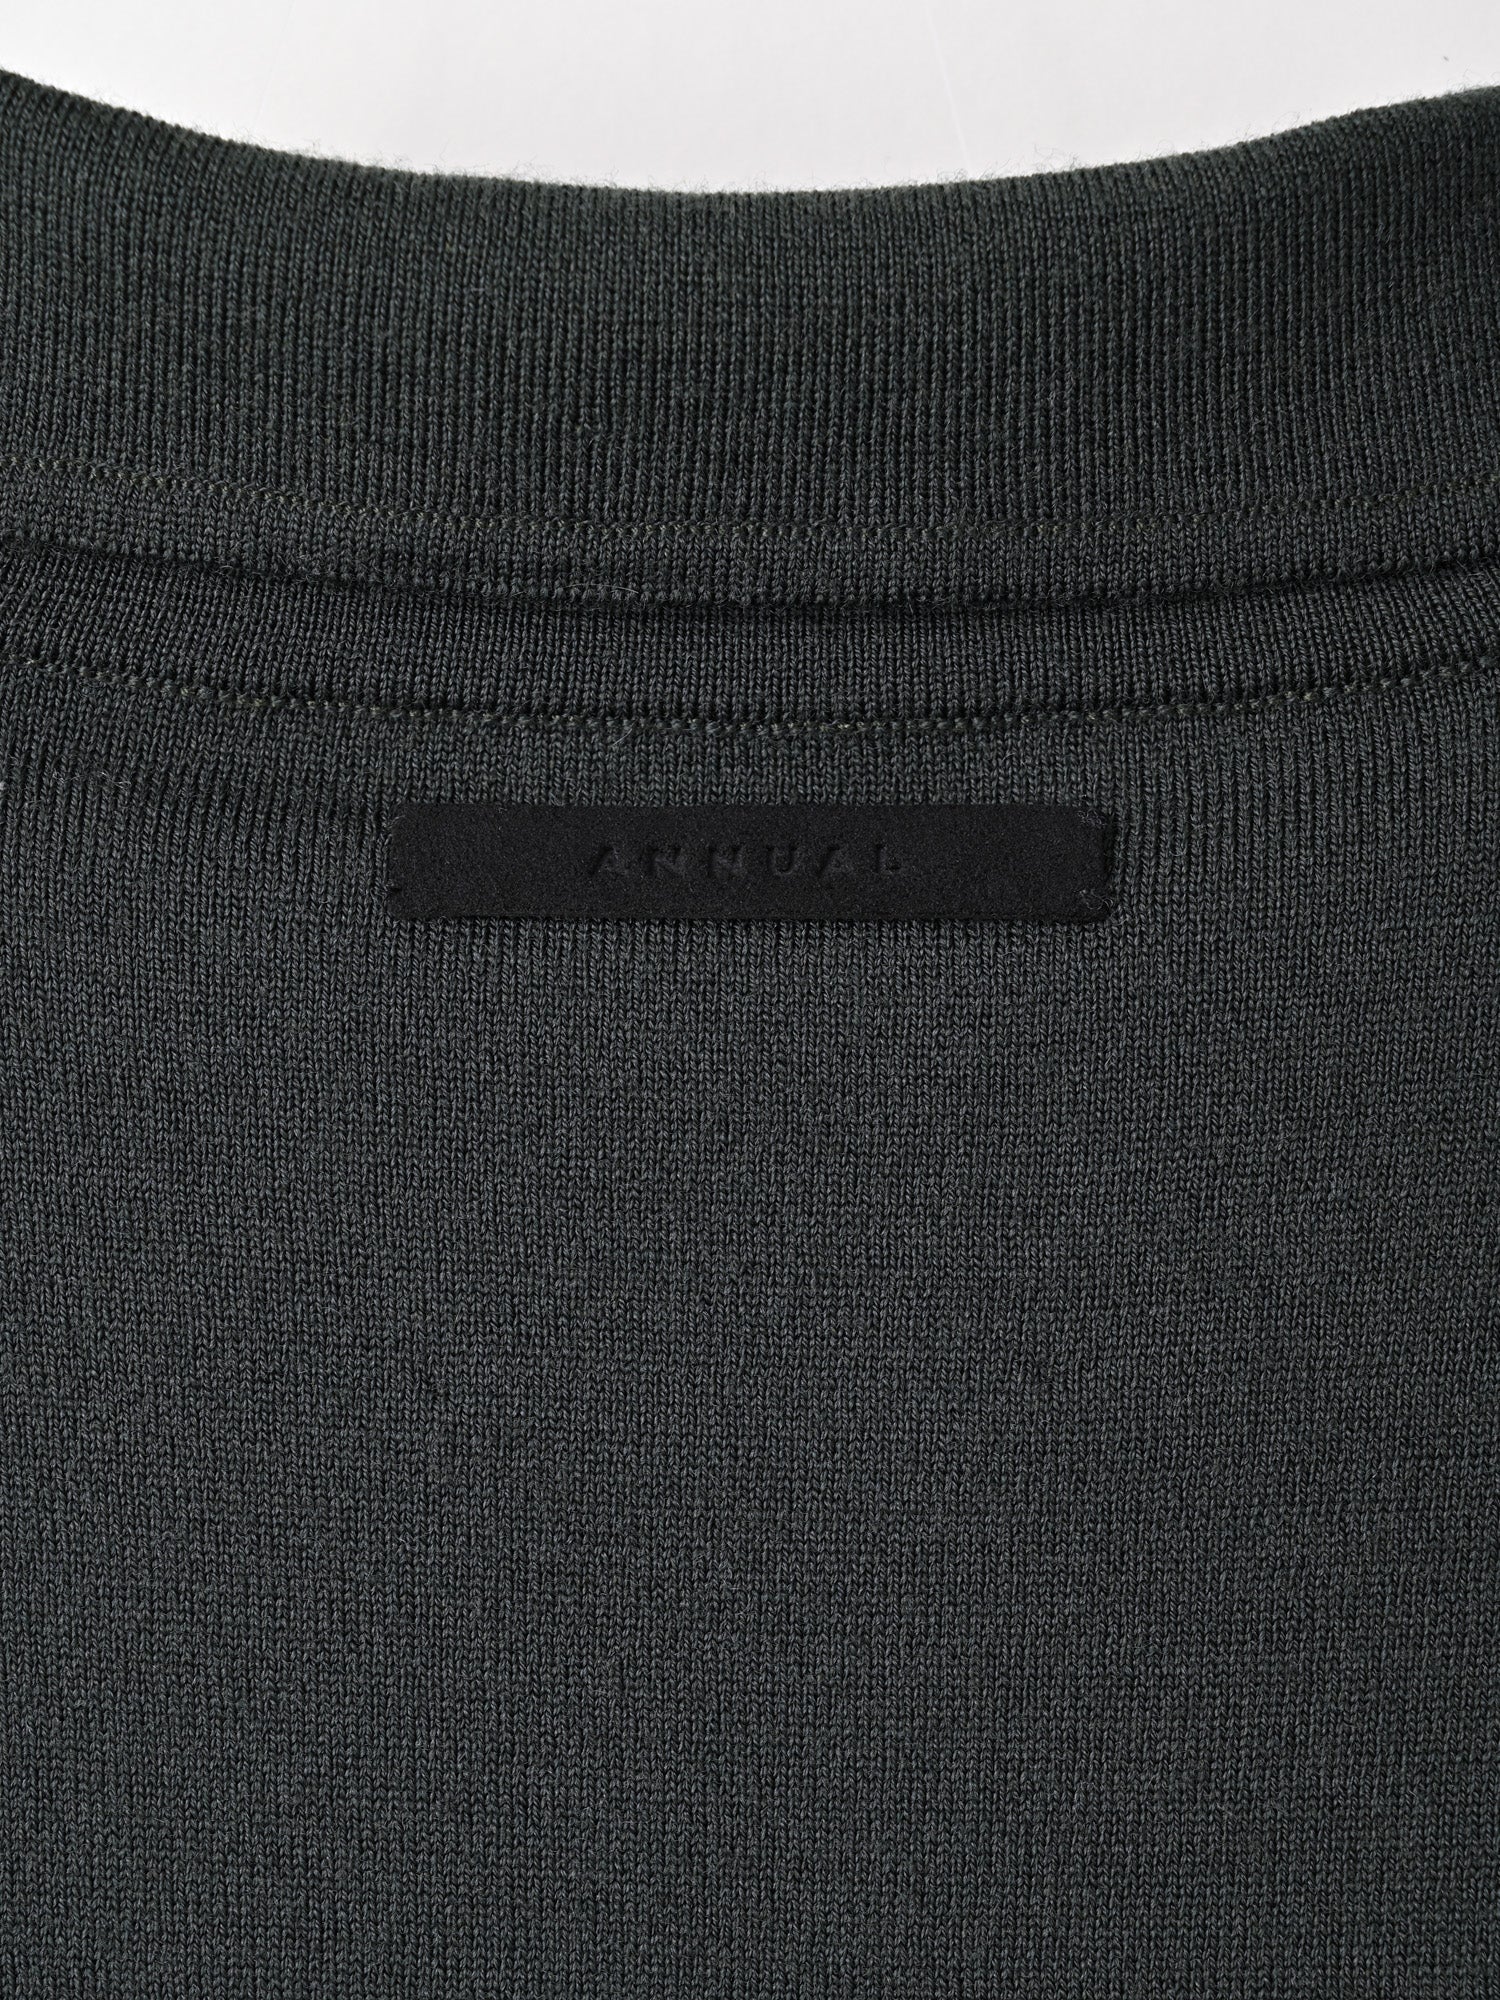 Smock knit shirts<BR>着方で印象を変えられるハイゲージニット